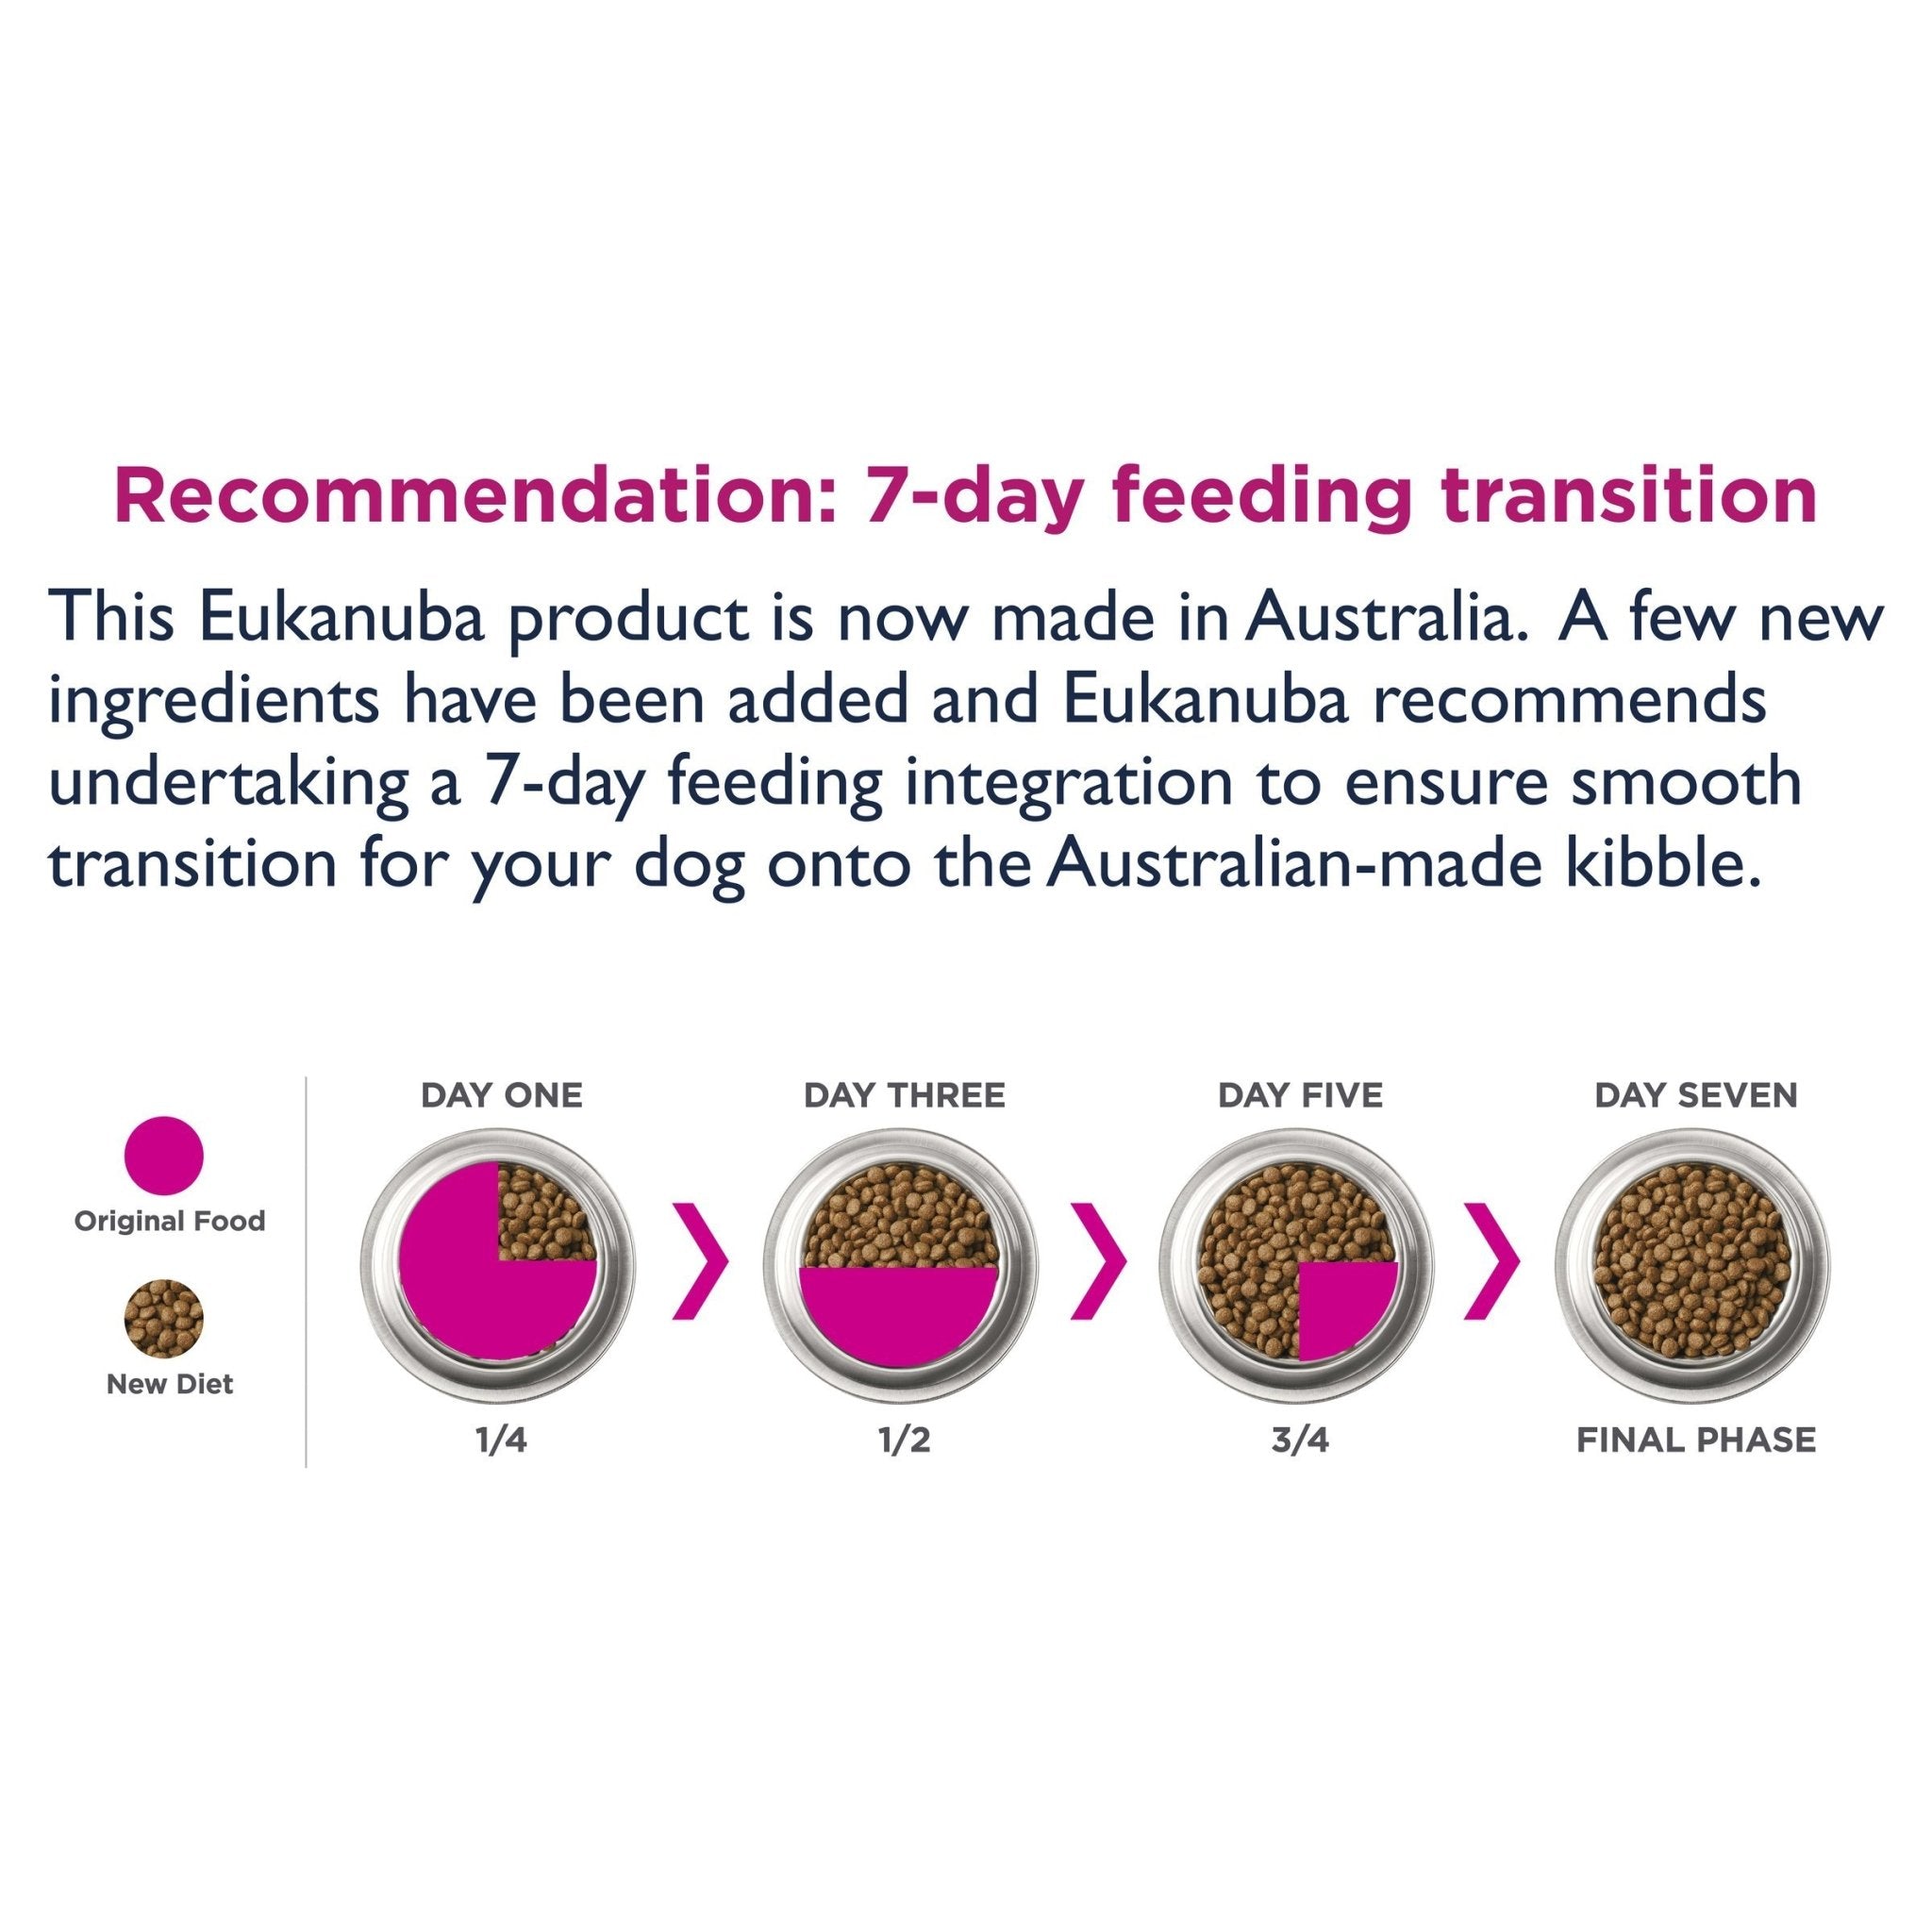 Eukanuba™ Adult Small Breed Dry Dog Food 3kg